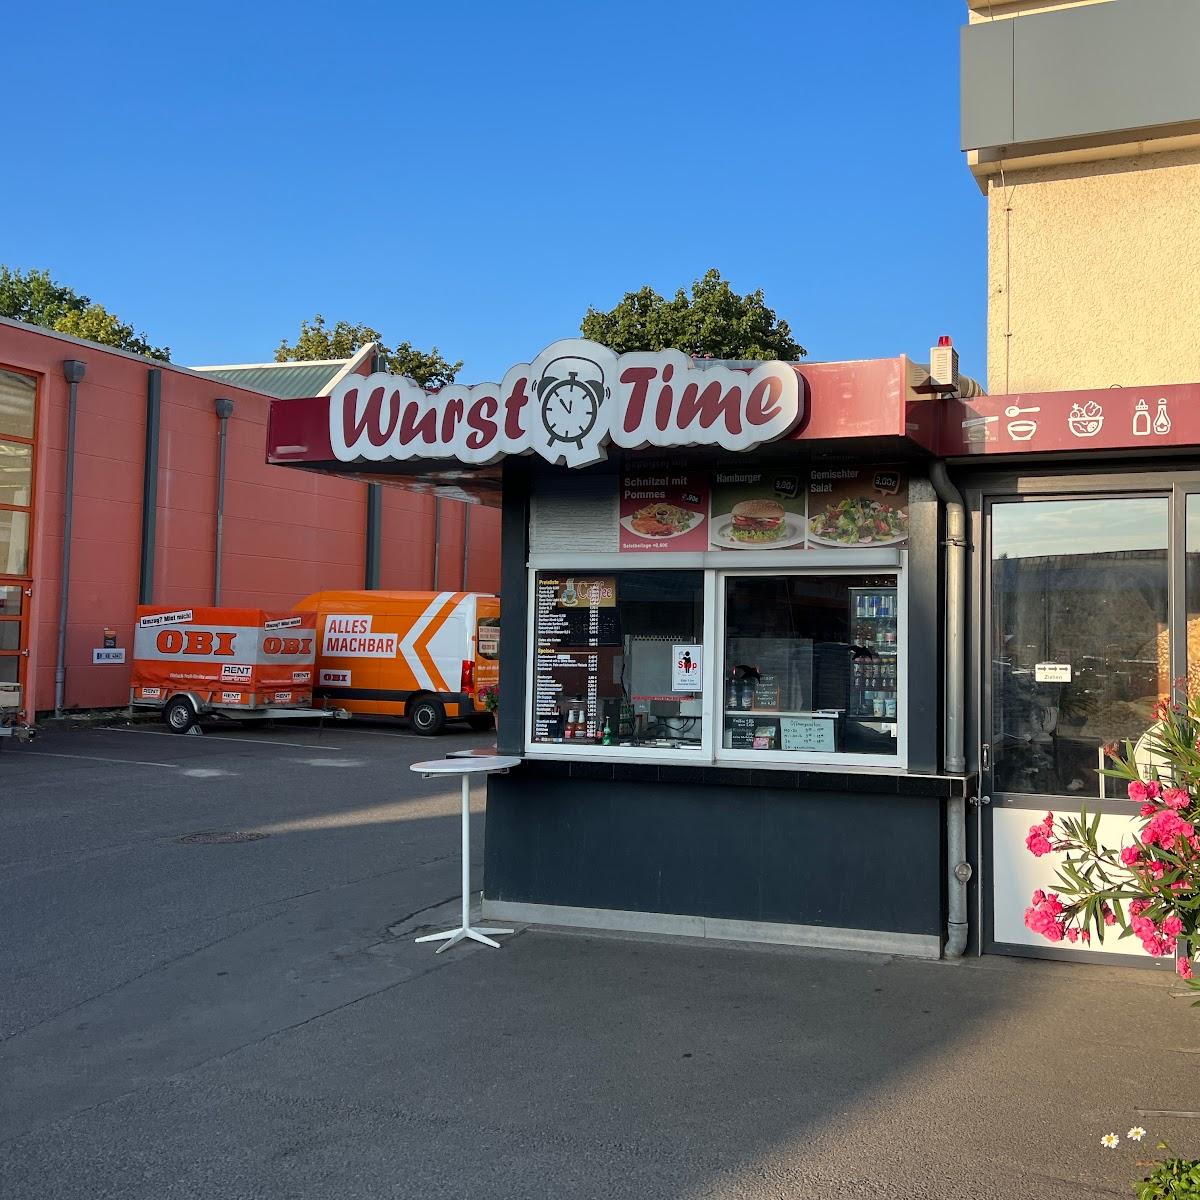 Restaurant "Wursttime" in Berlin